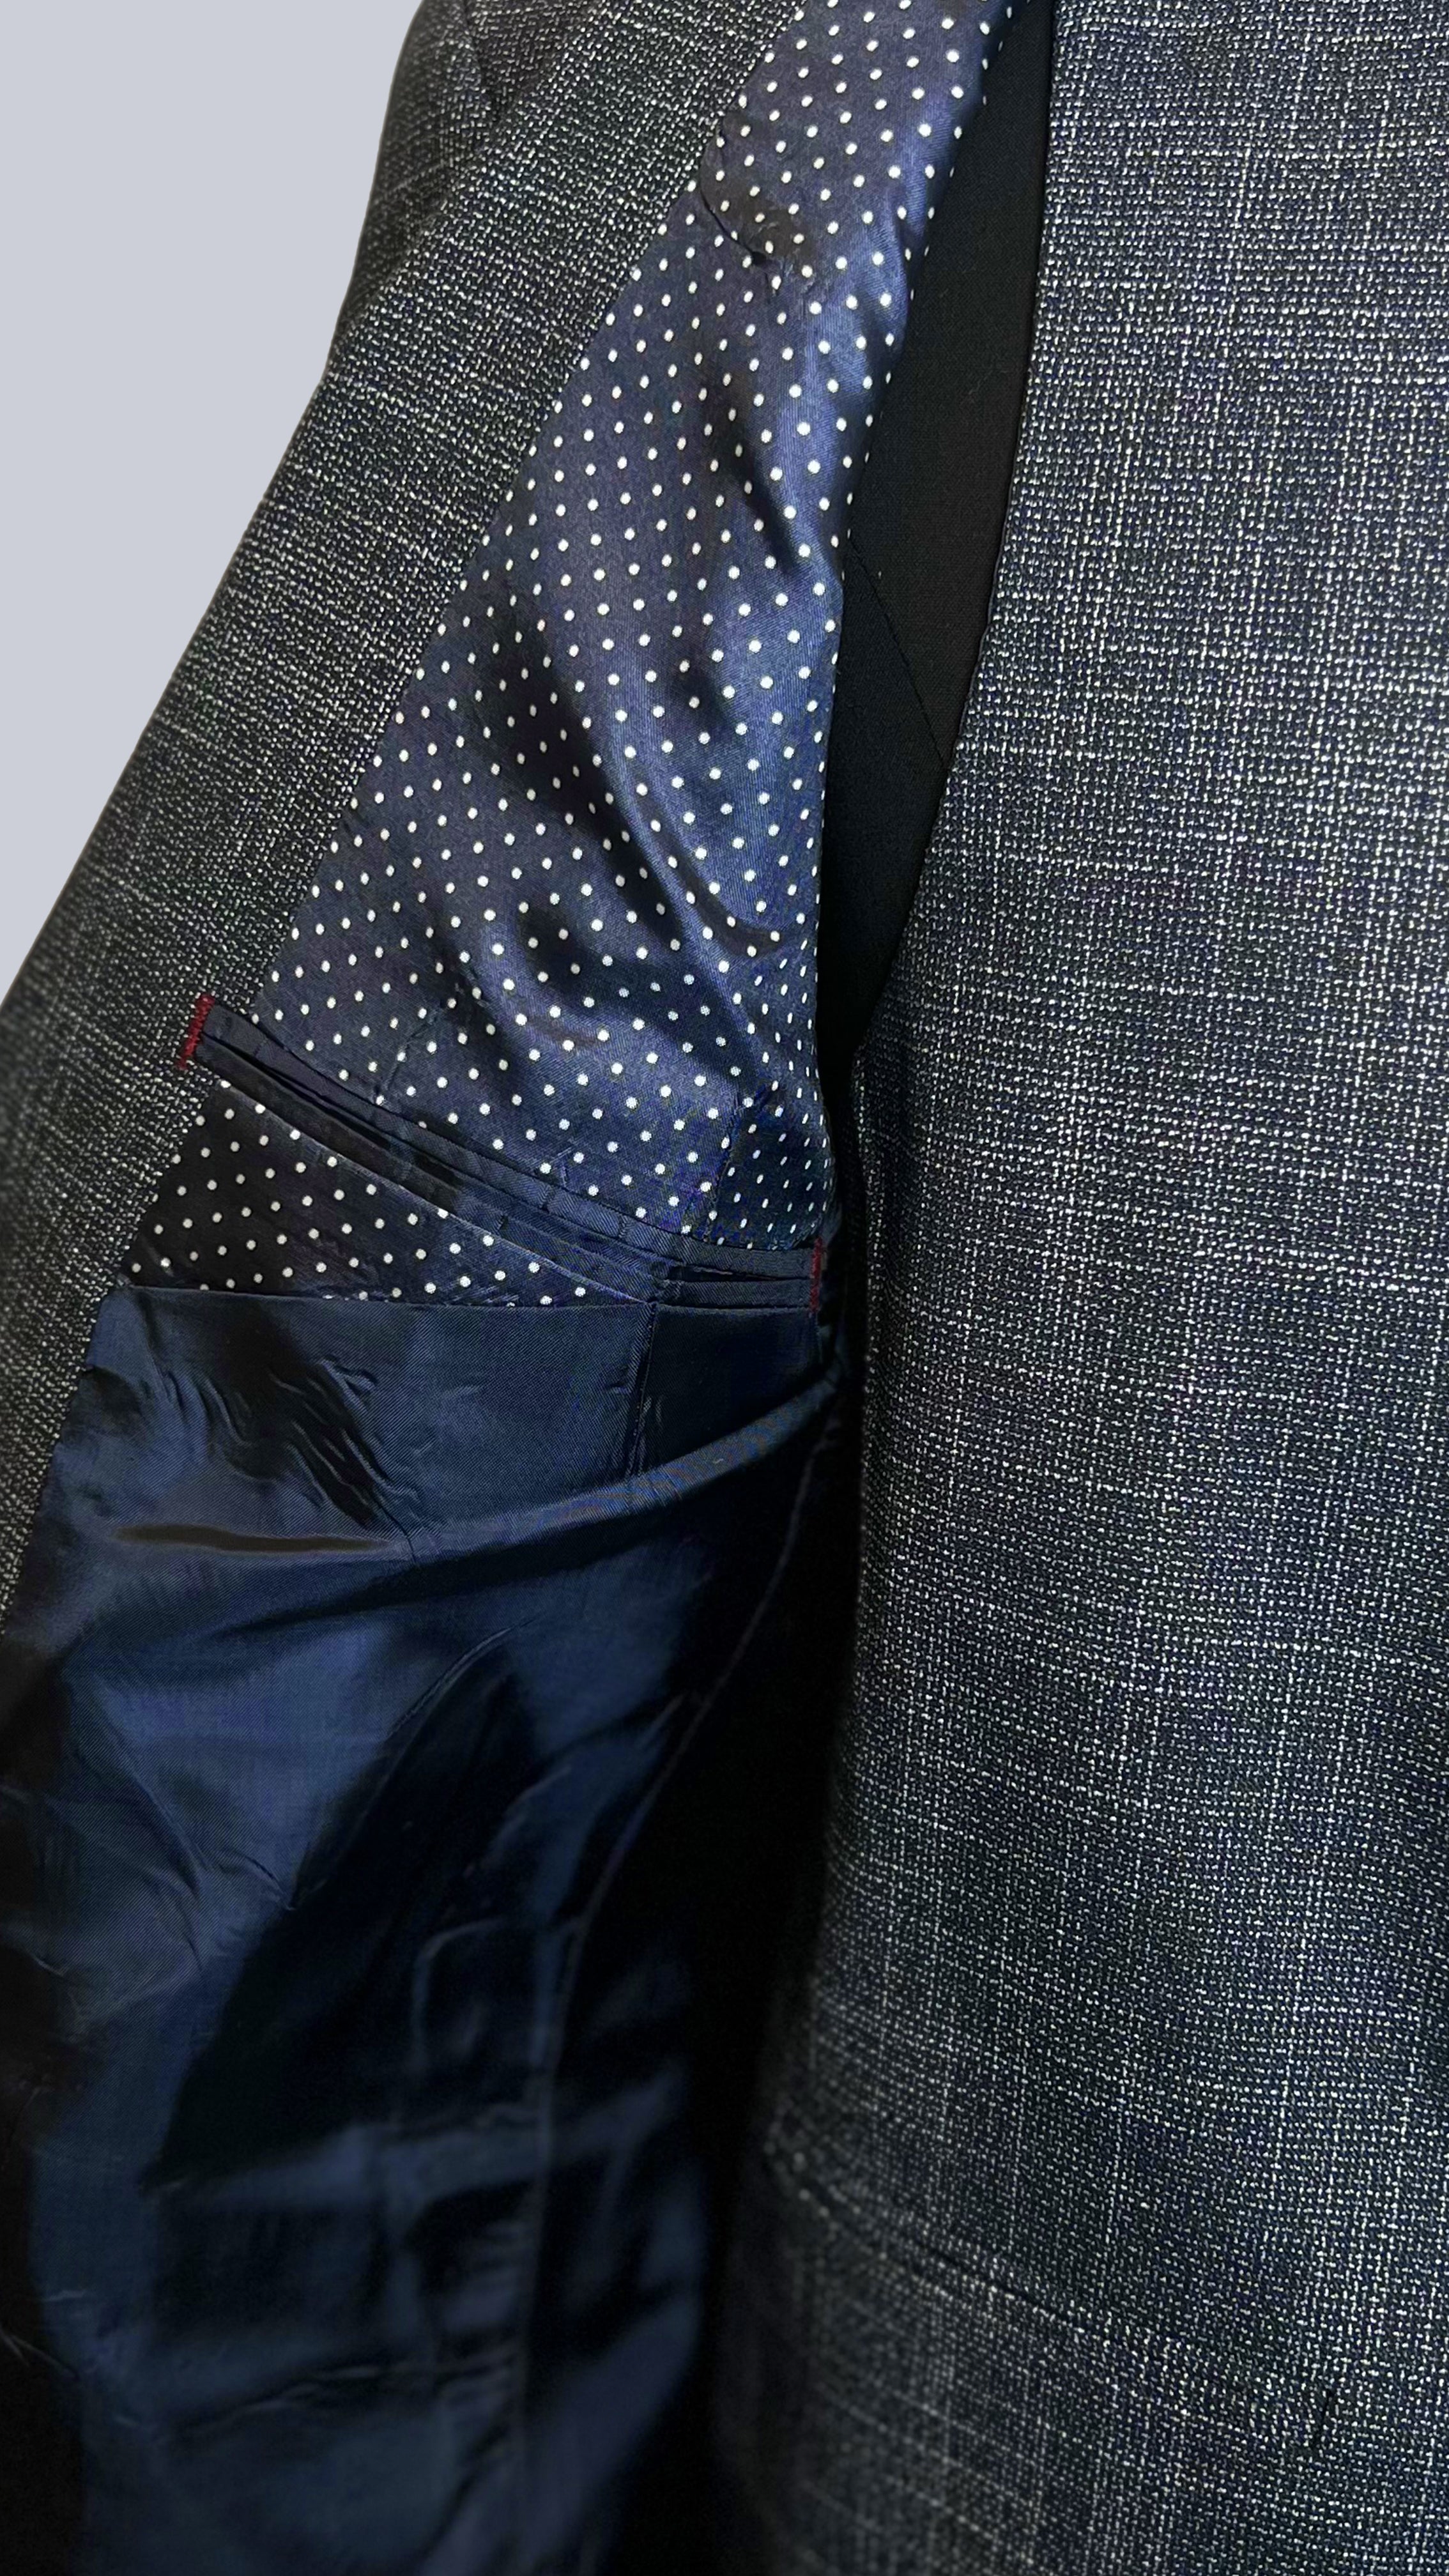 Chambray Elegance Men's Three Piece Suit by Vercini